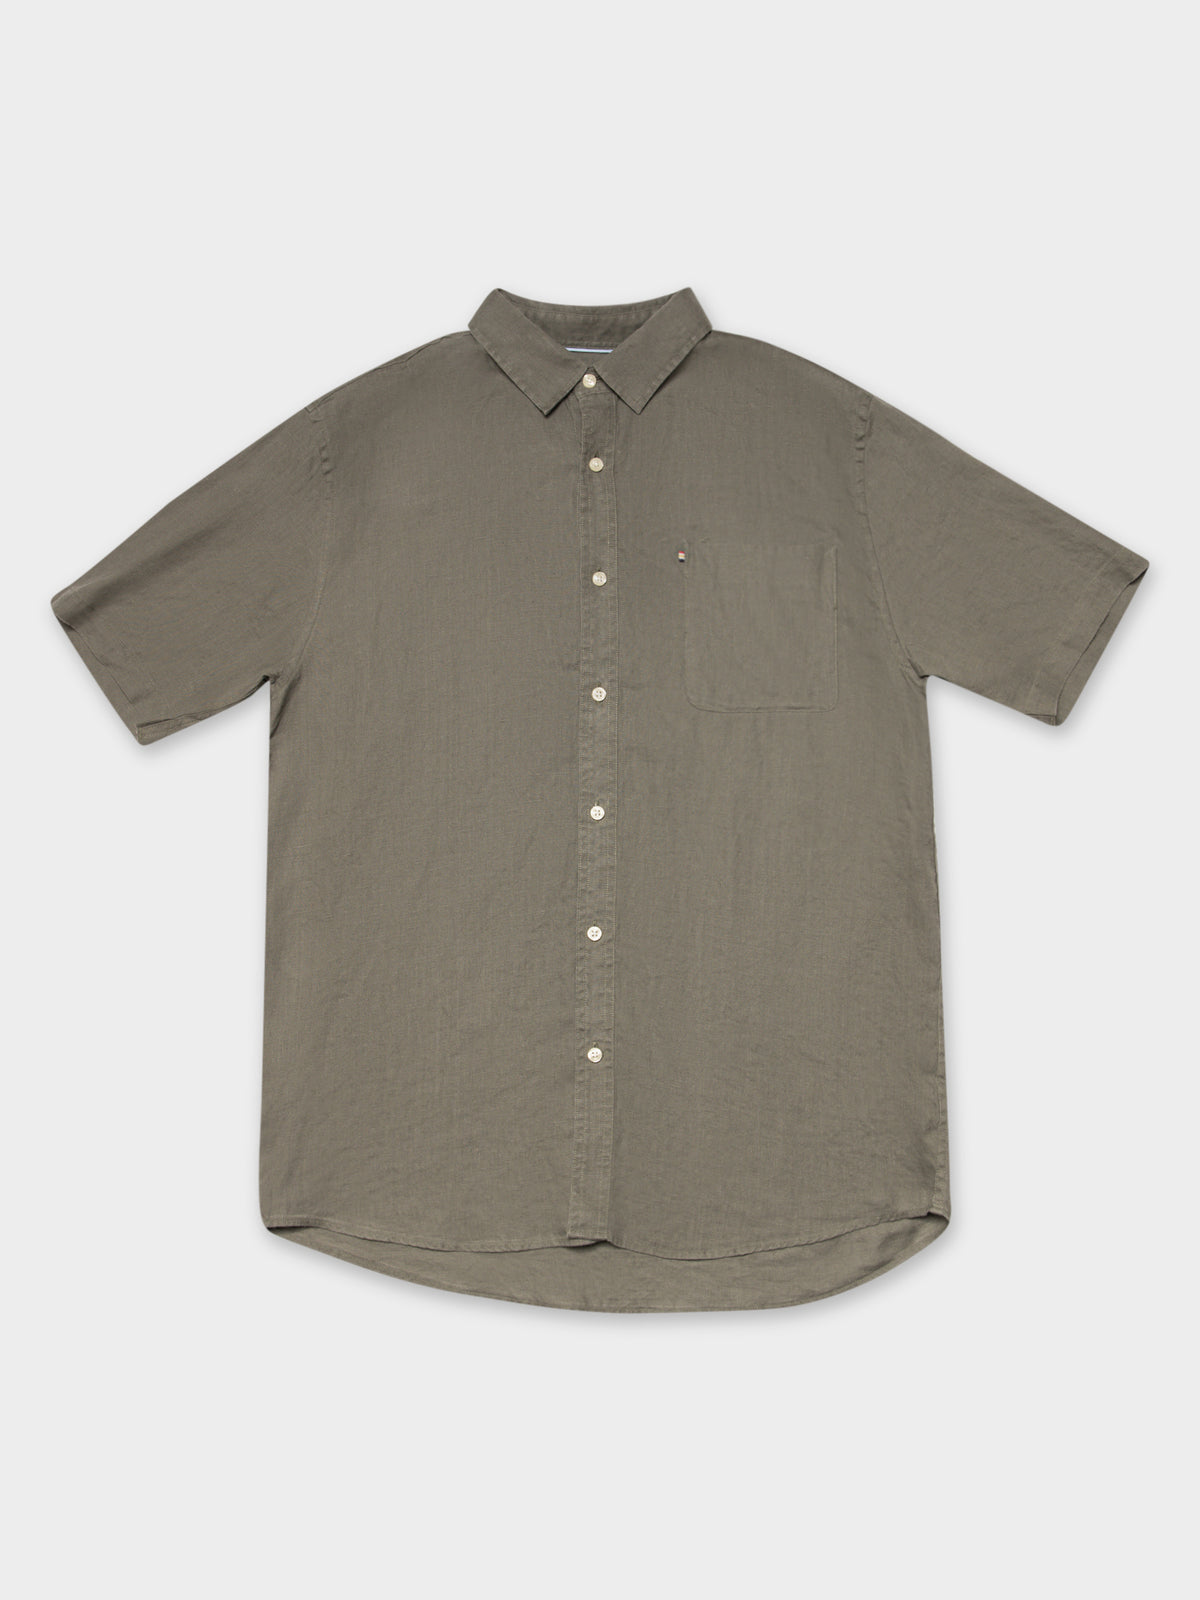 Hampton Linen Short Sleeve T-Shirt in Olive